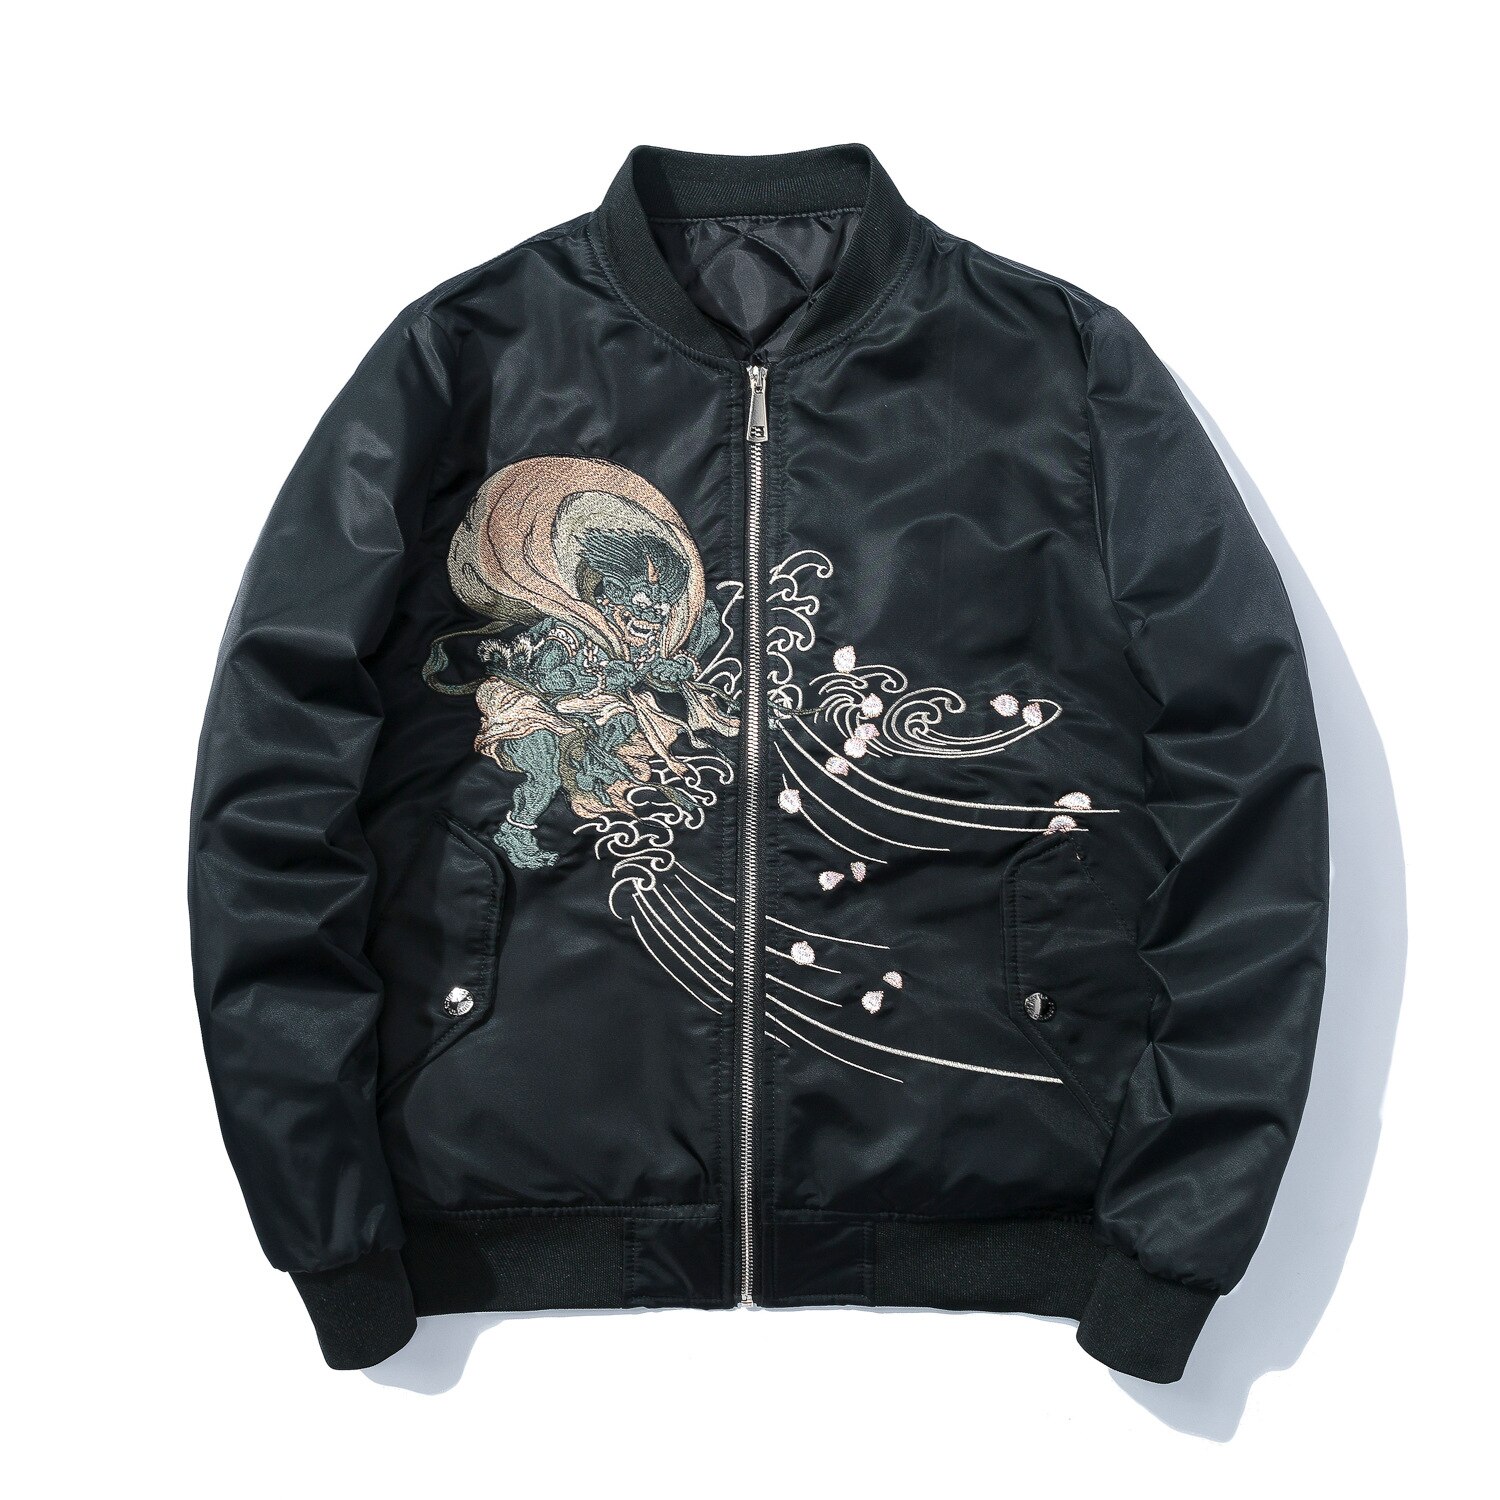 2021 giacca da uomo ricamata in stile cinese primavera e autunno giacca da volo da uomo giacca ricamata di marca Chao